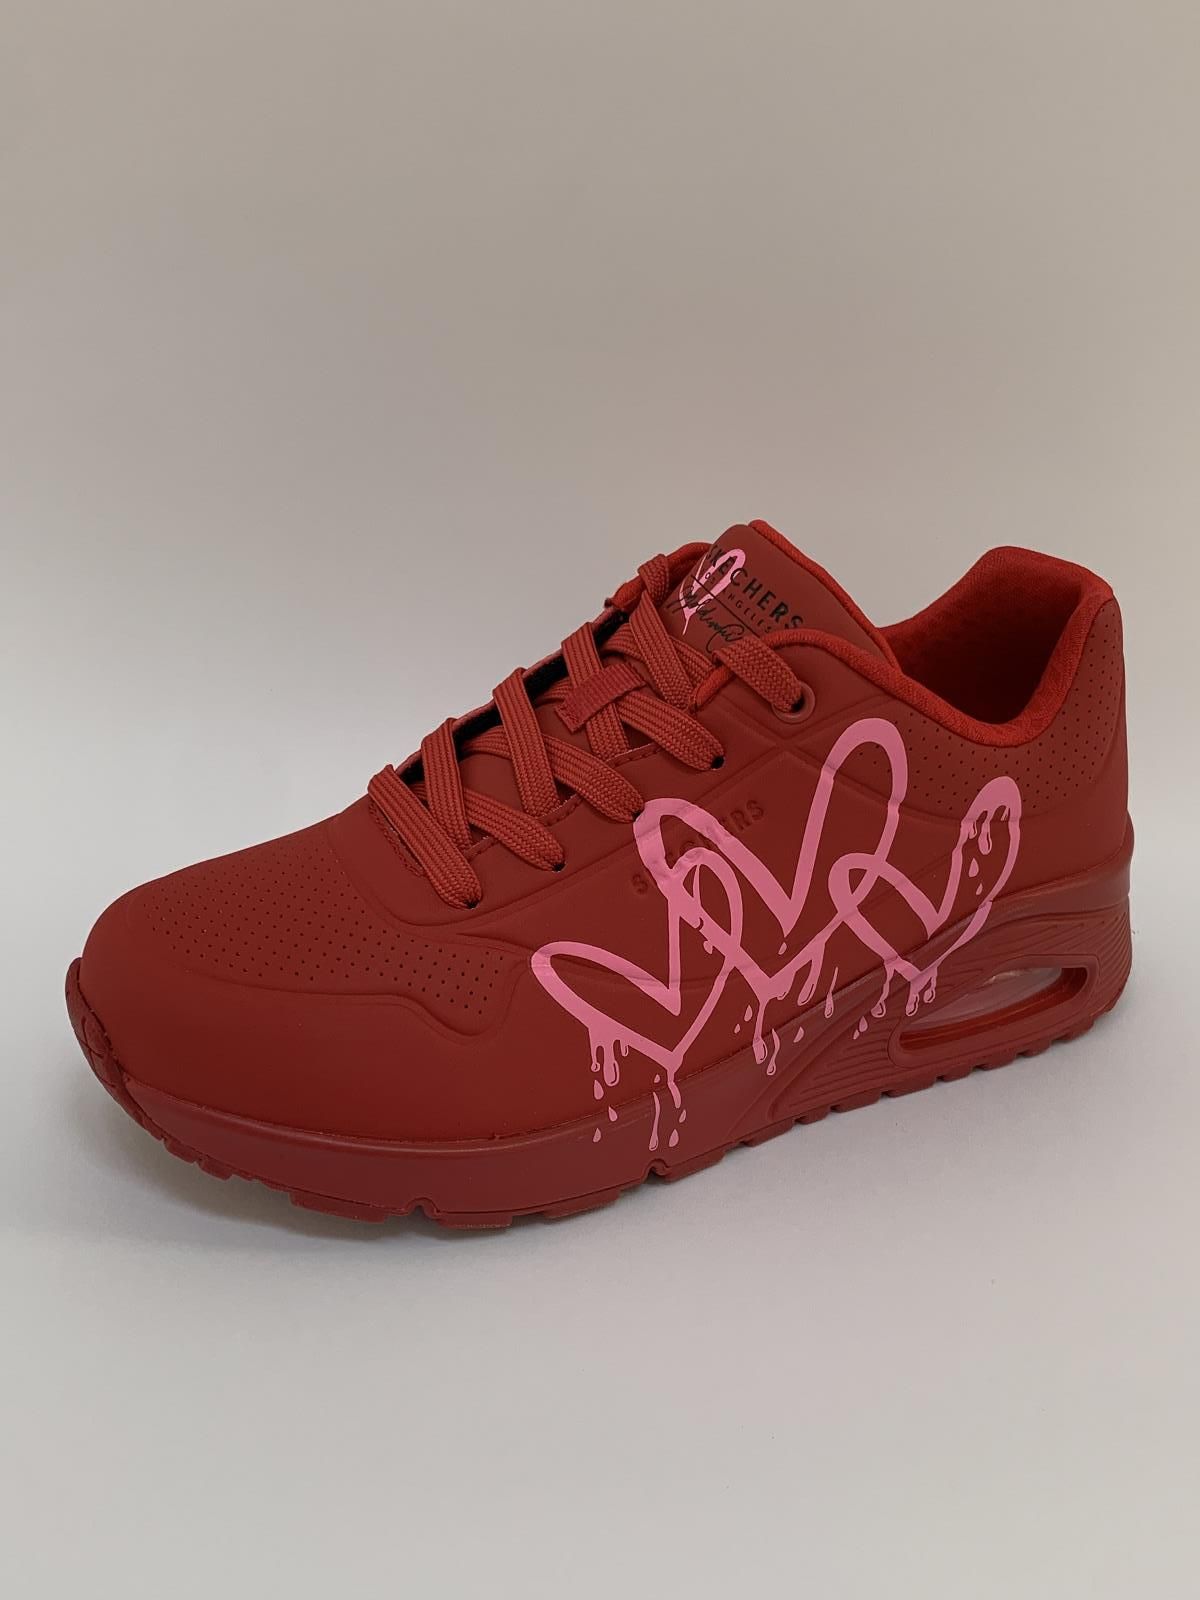 Skechers Sneaker Rood dames (Runner Air Max Hart - 177981) - Schoenen Luca